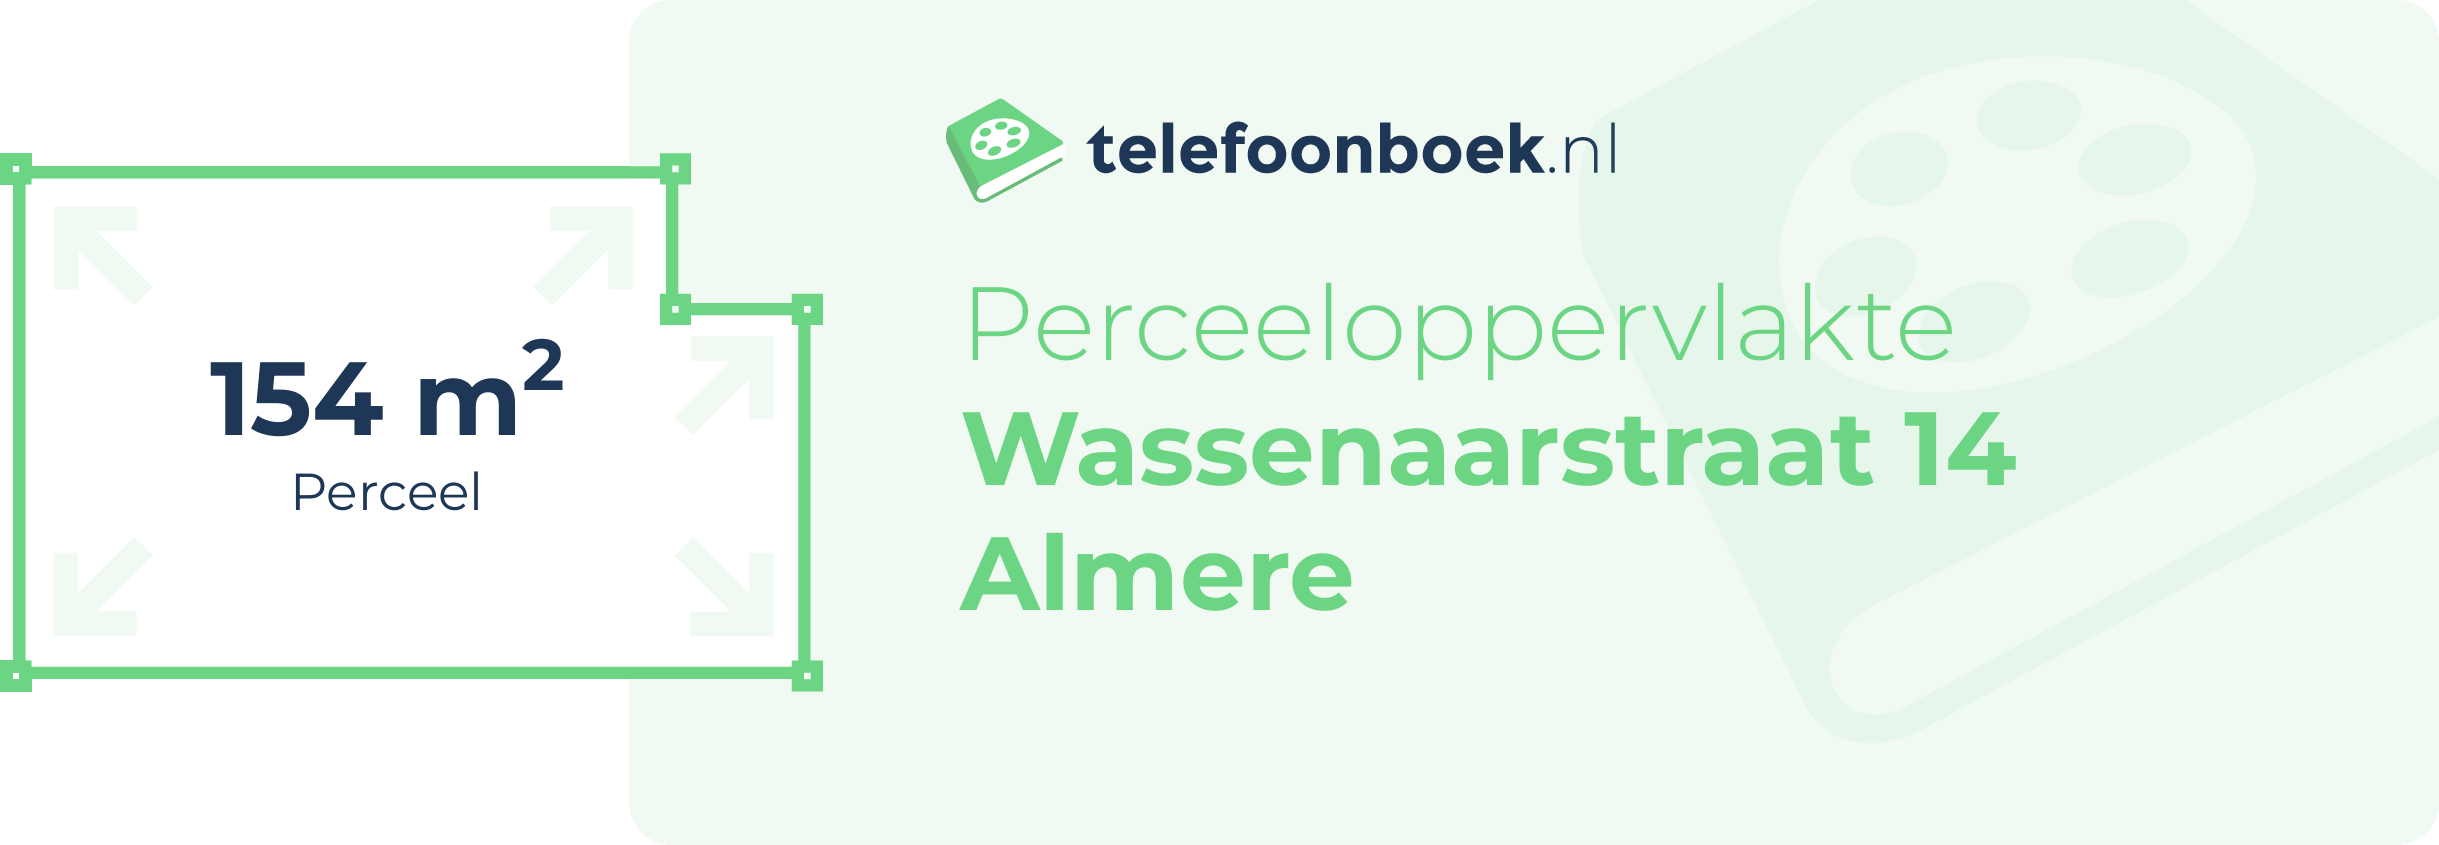 Perceeloppervlakte Wassenaarstraat 14 Almere